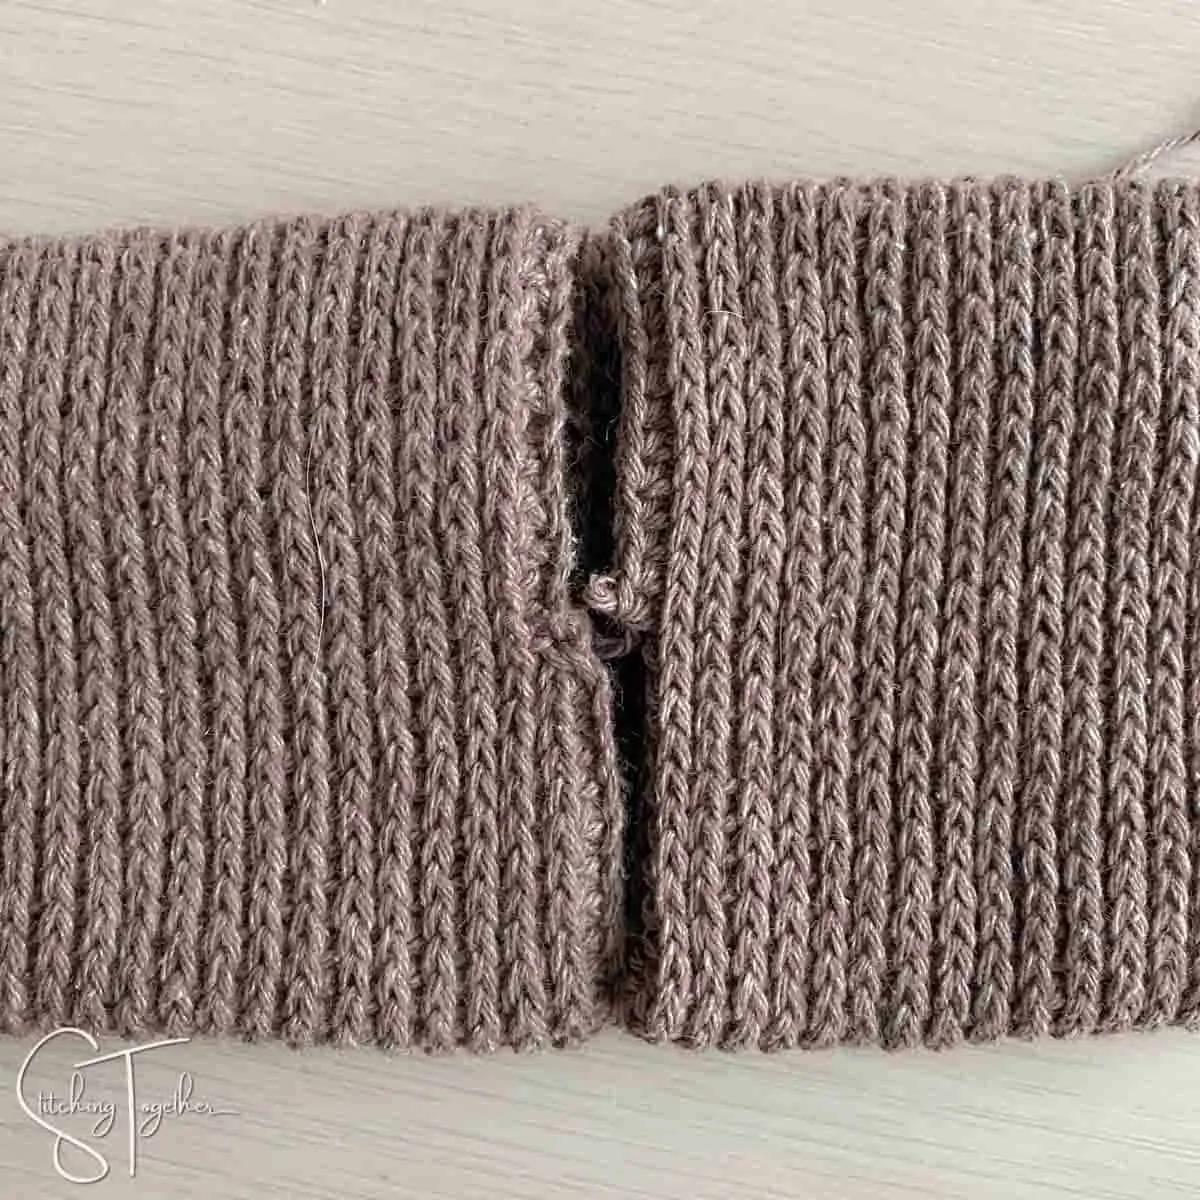 lining up ends of a crochet headband